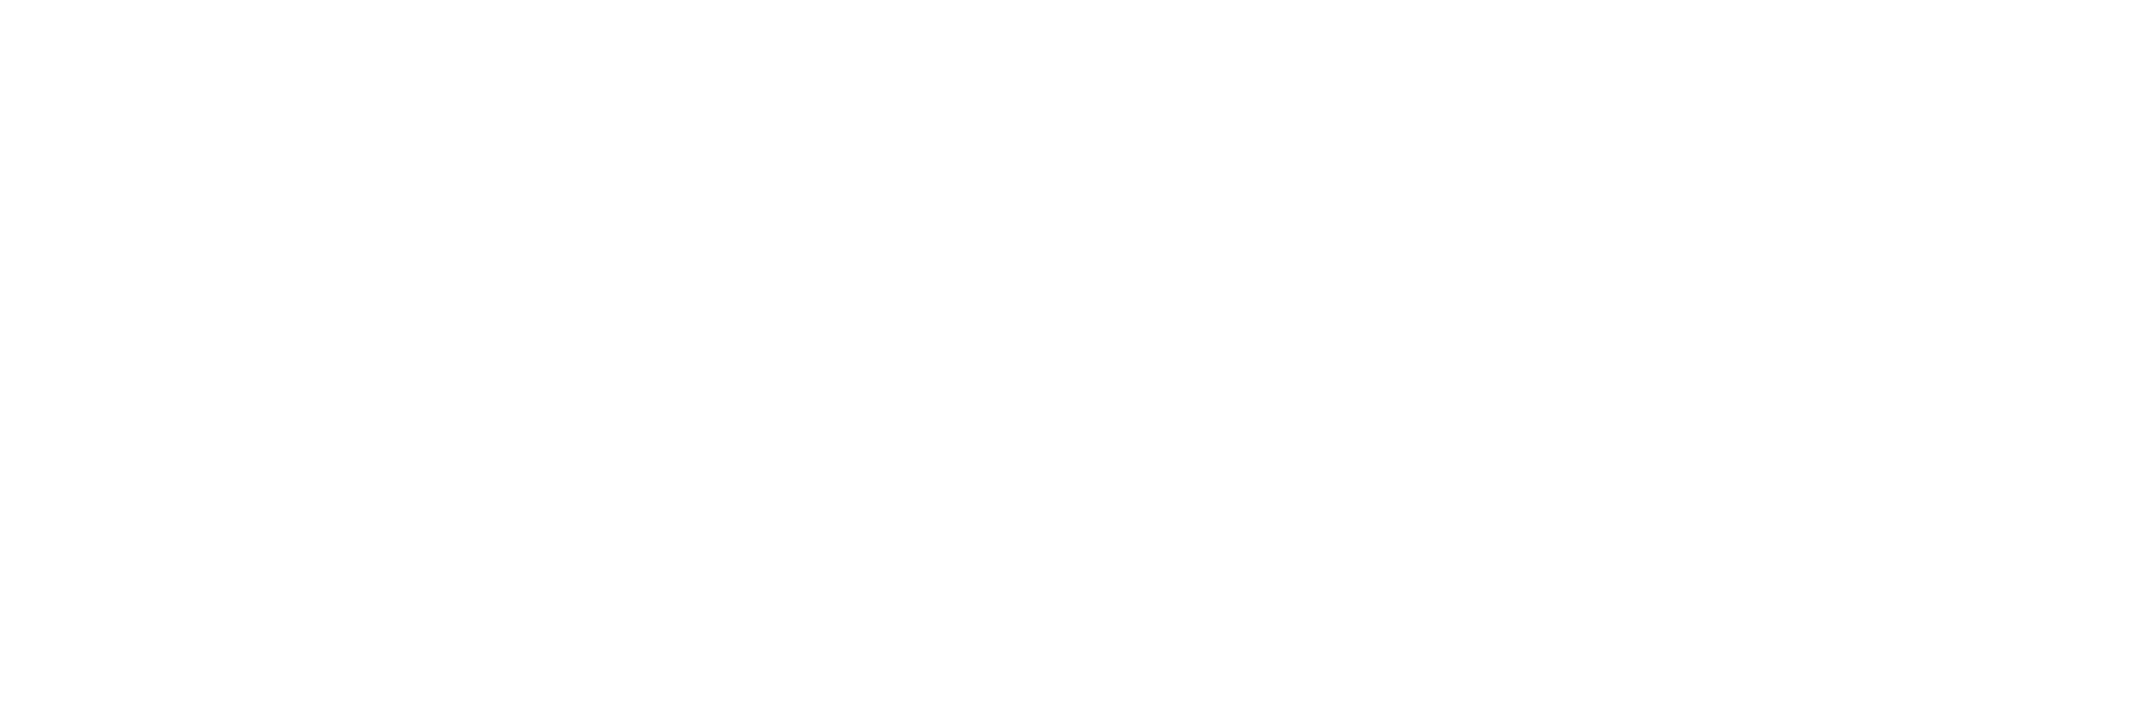 SVK-Logo-white